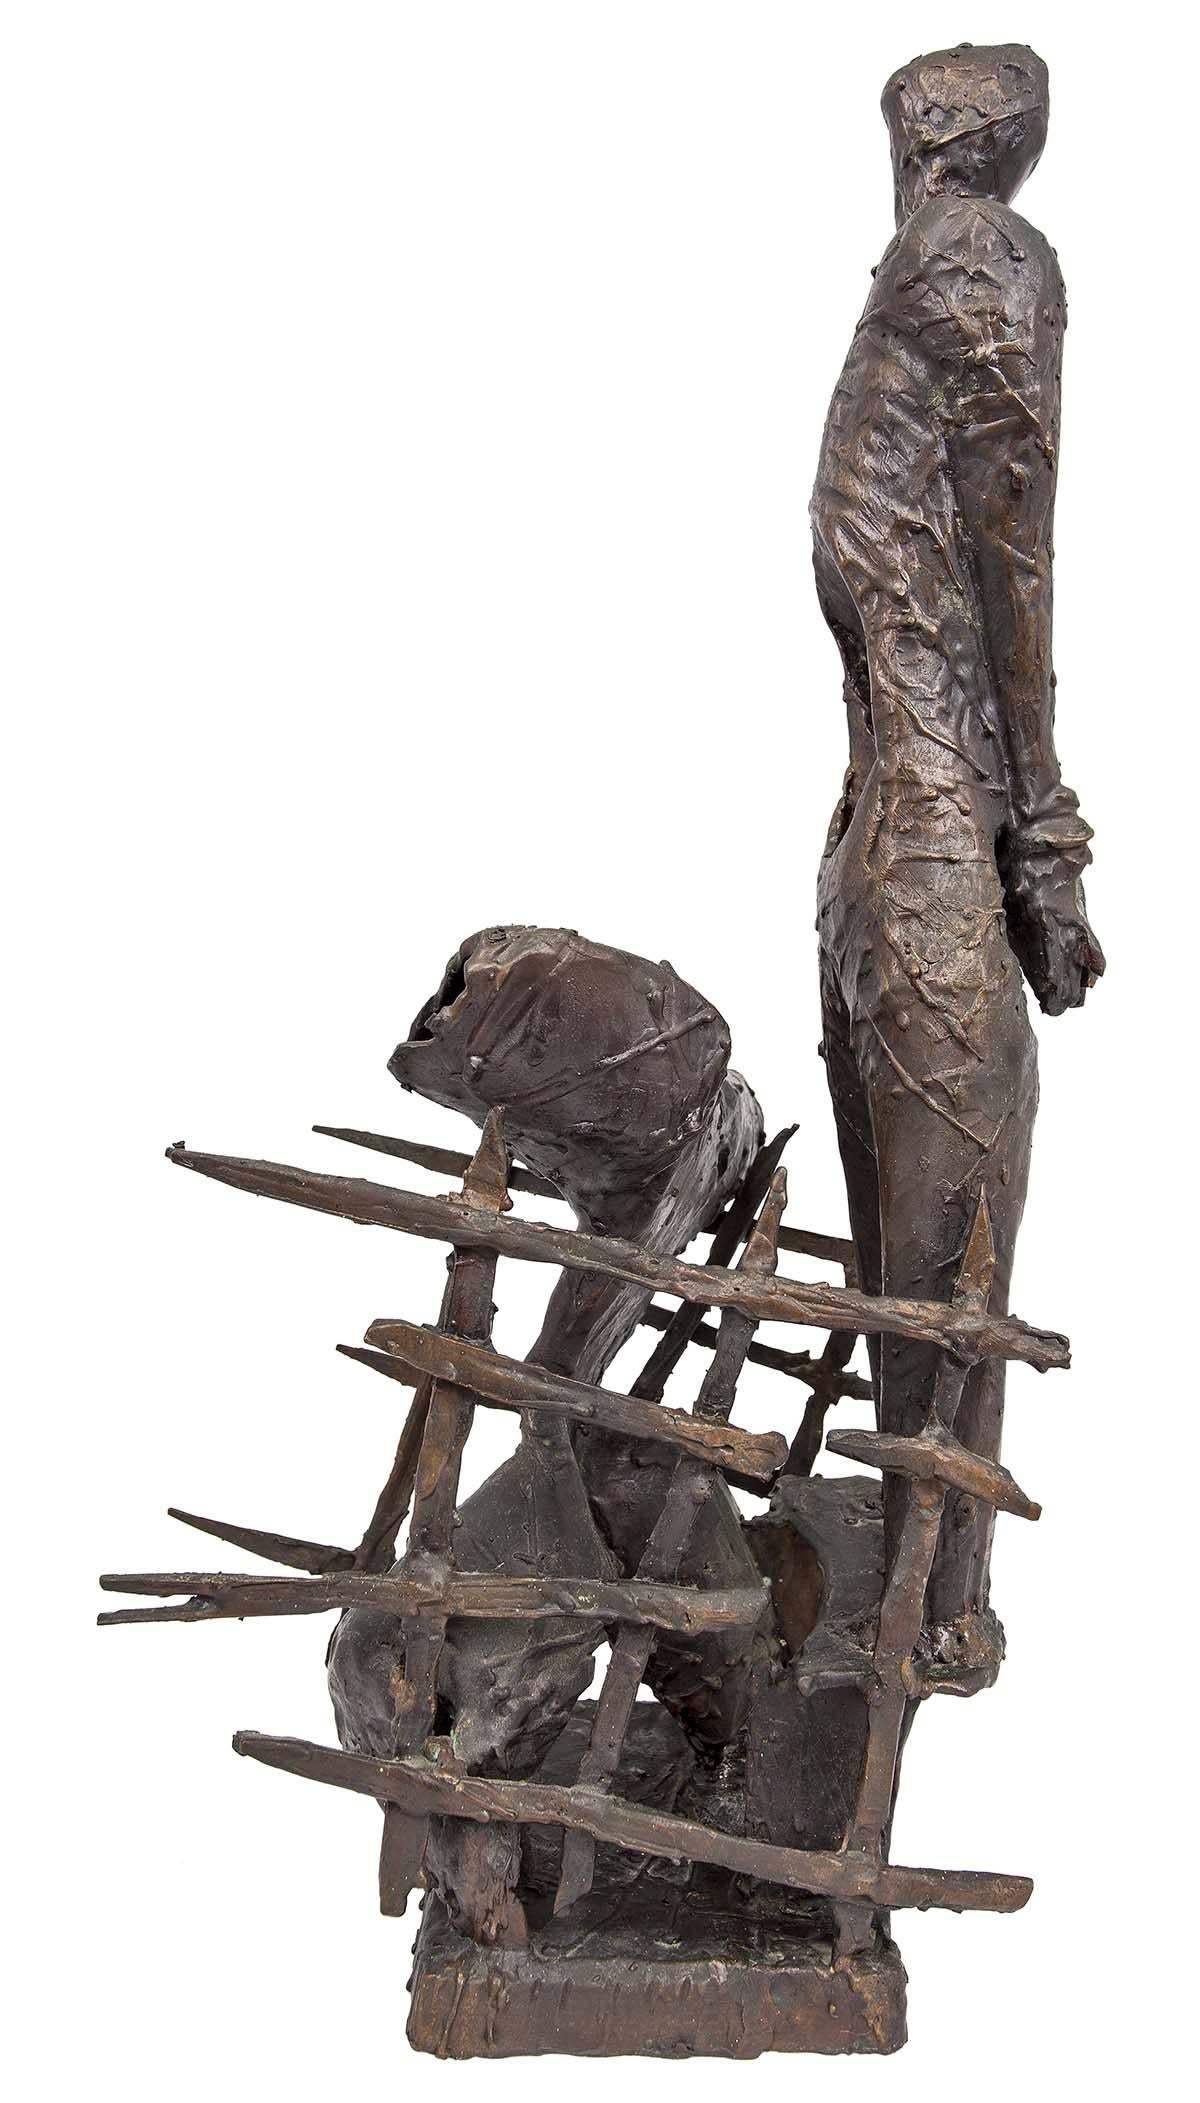 Brutalist Bronze Sculpture, Monument to Oppression, Expressionist Holocaust Art 2